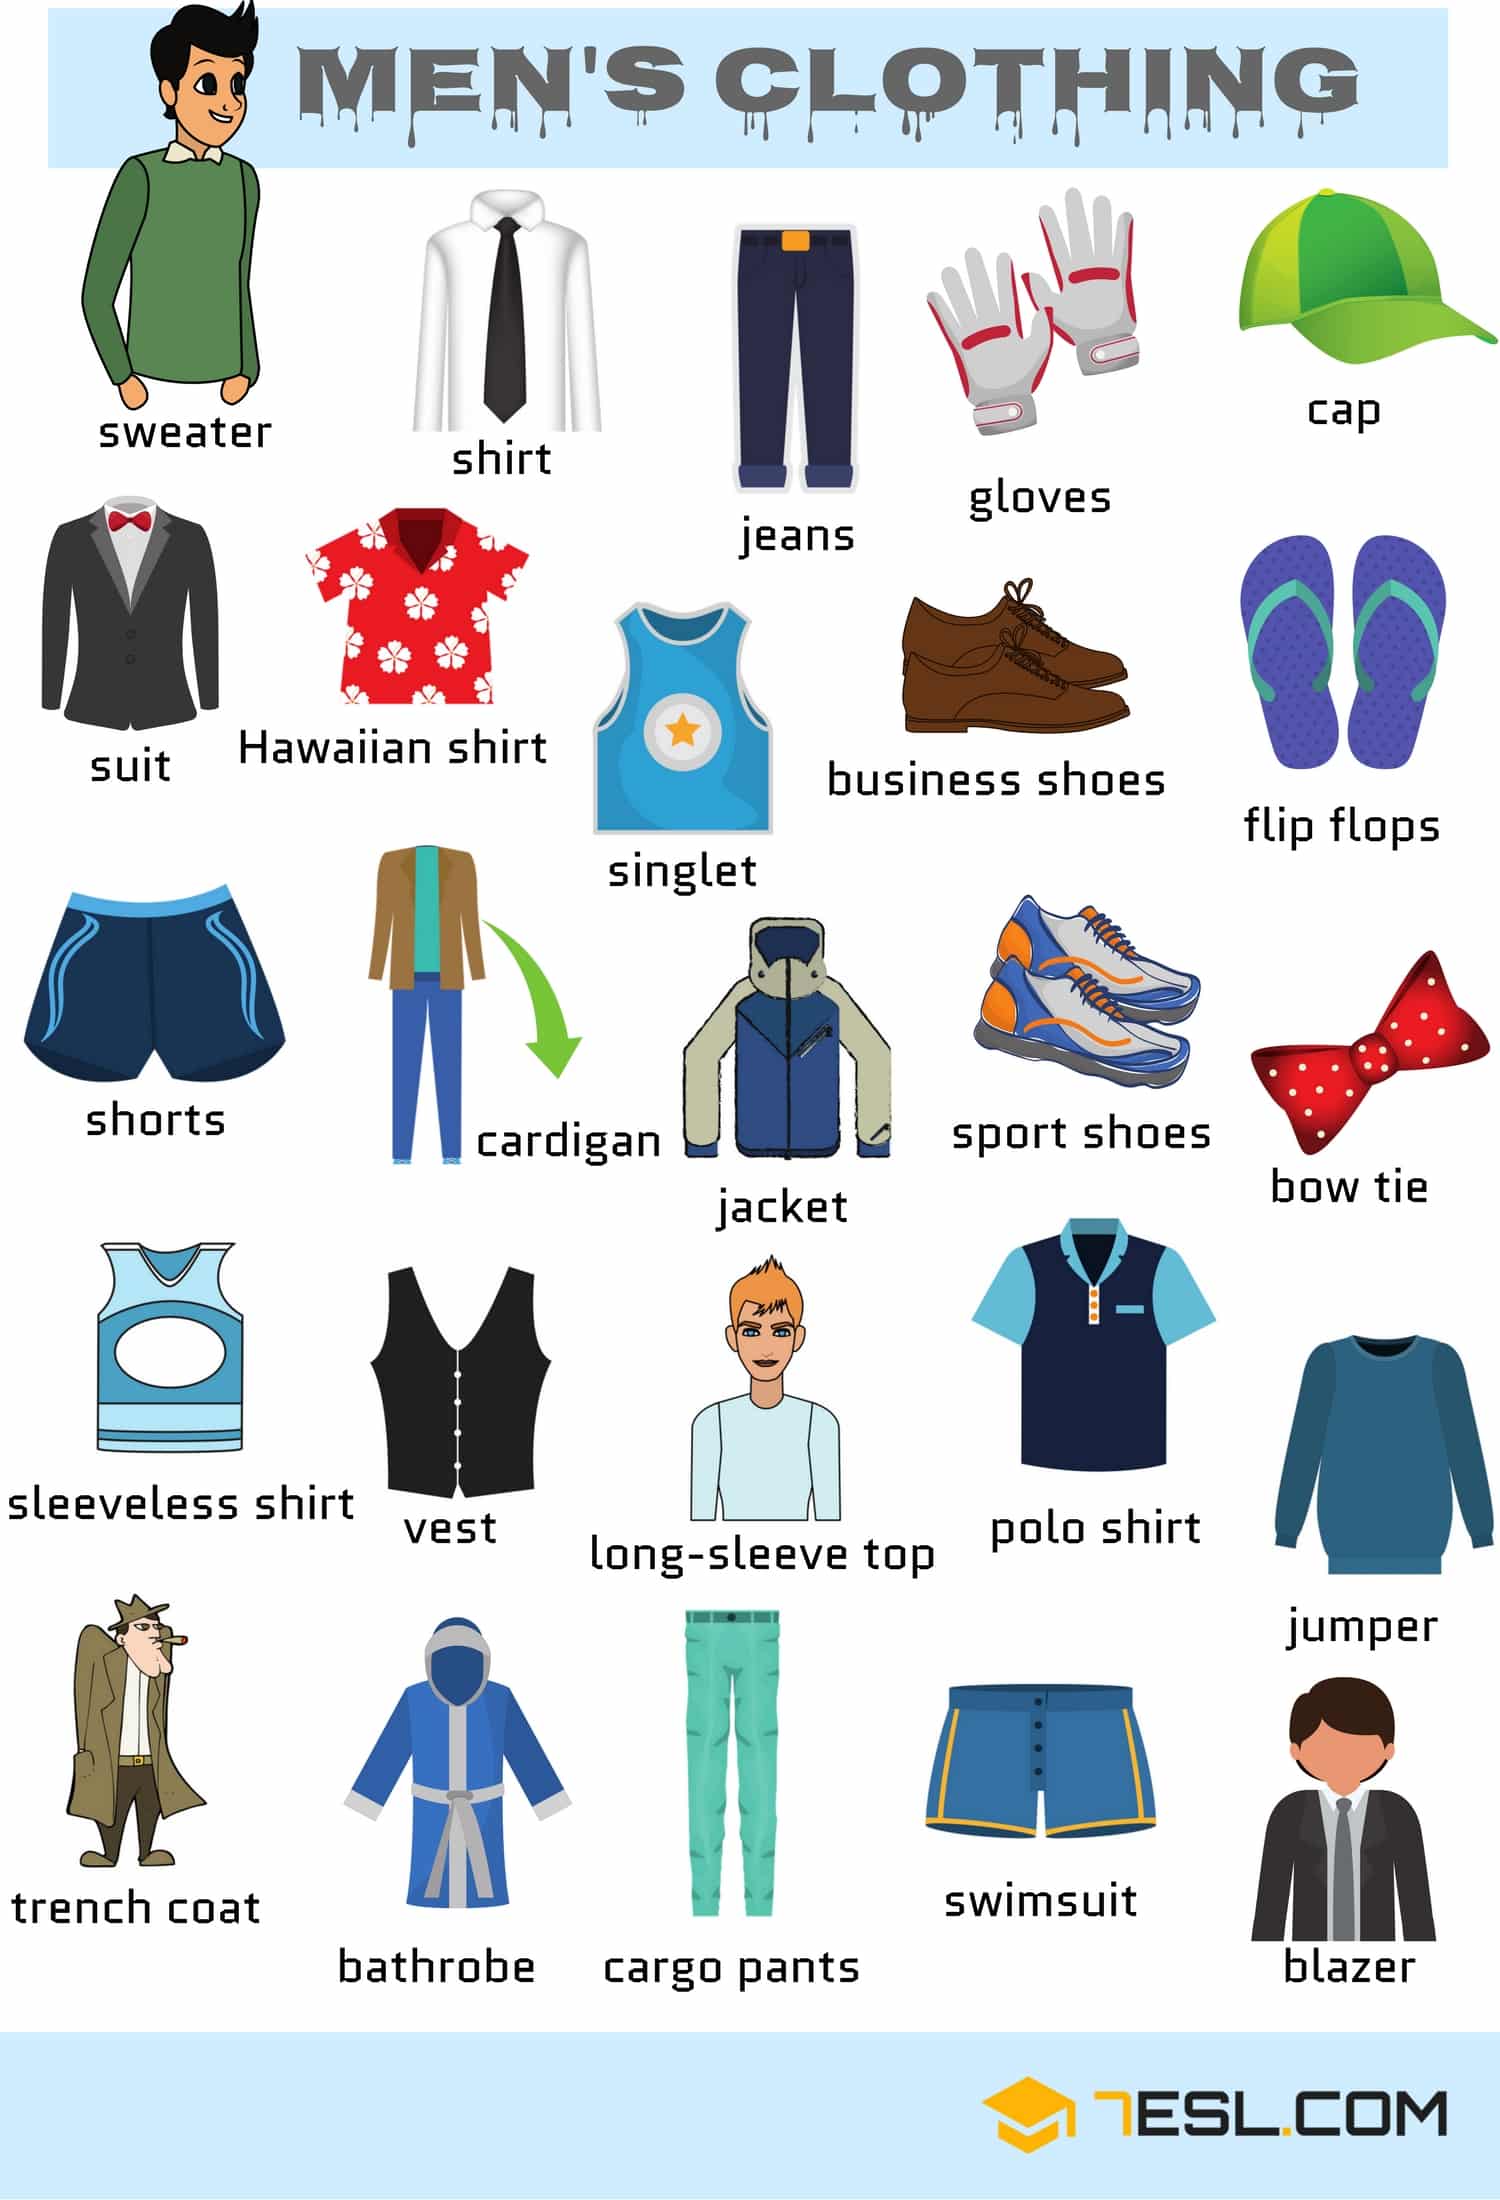 Men's clothing vocabulary